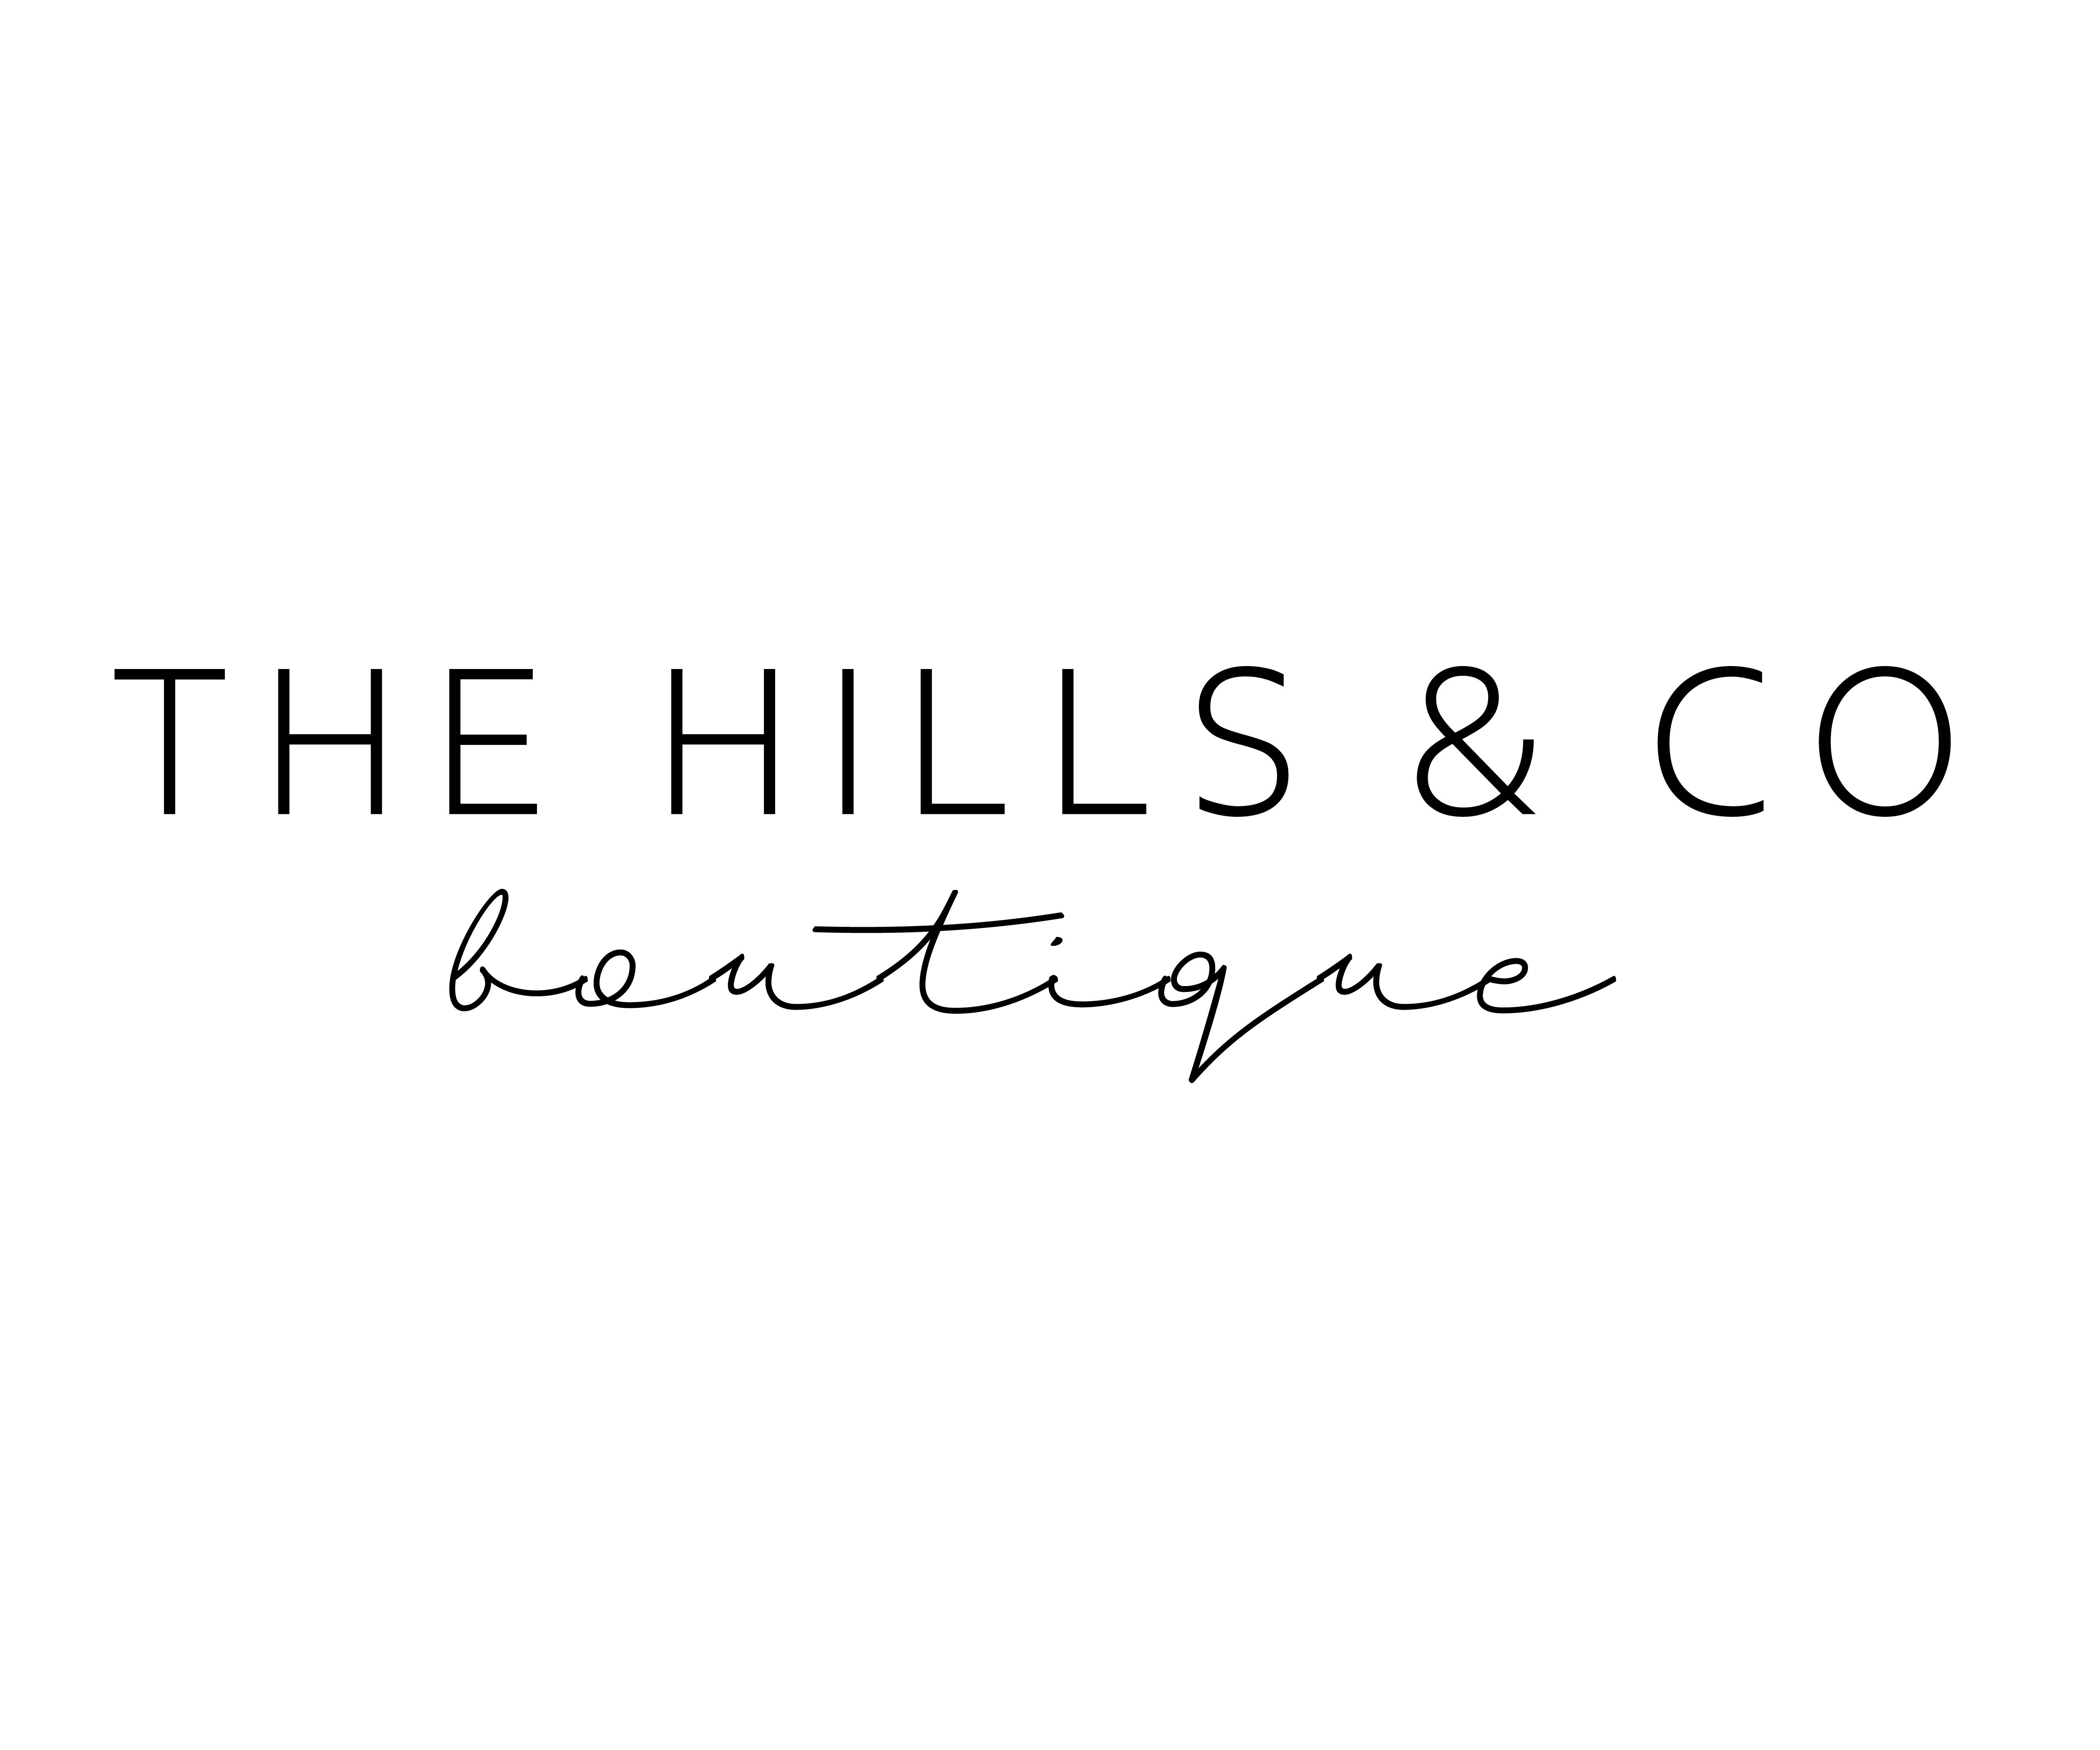 The Hills & Co Boutique